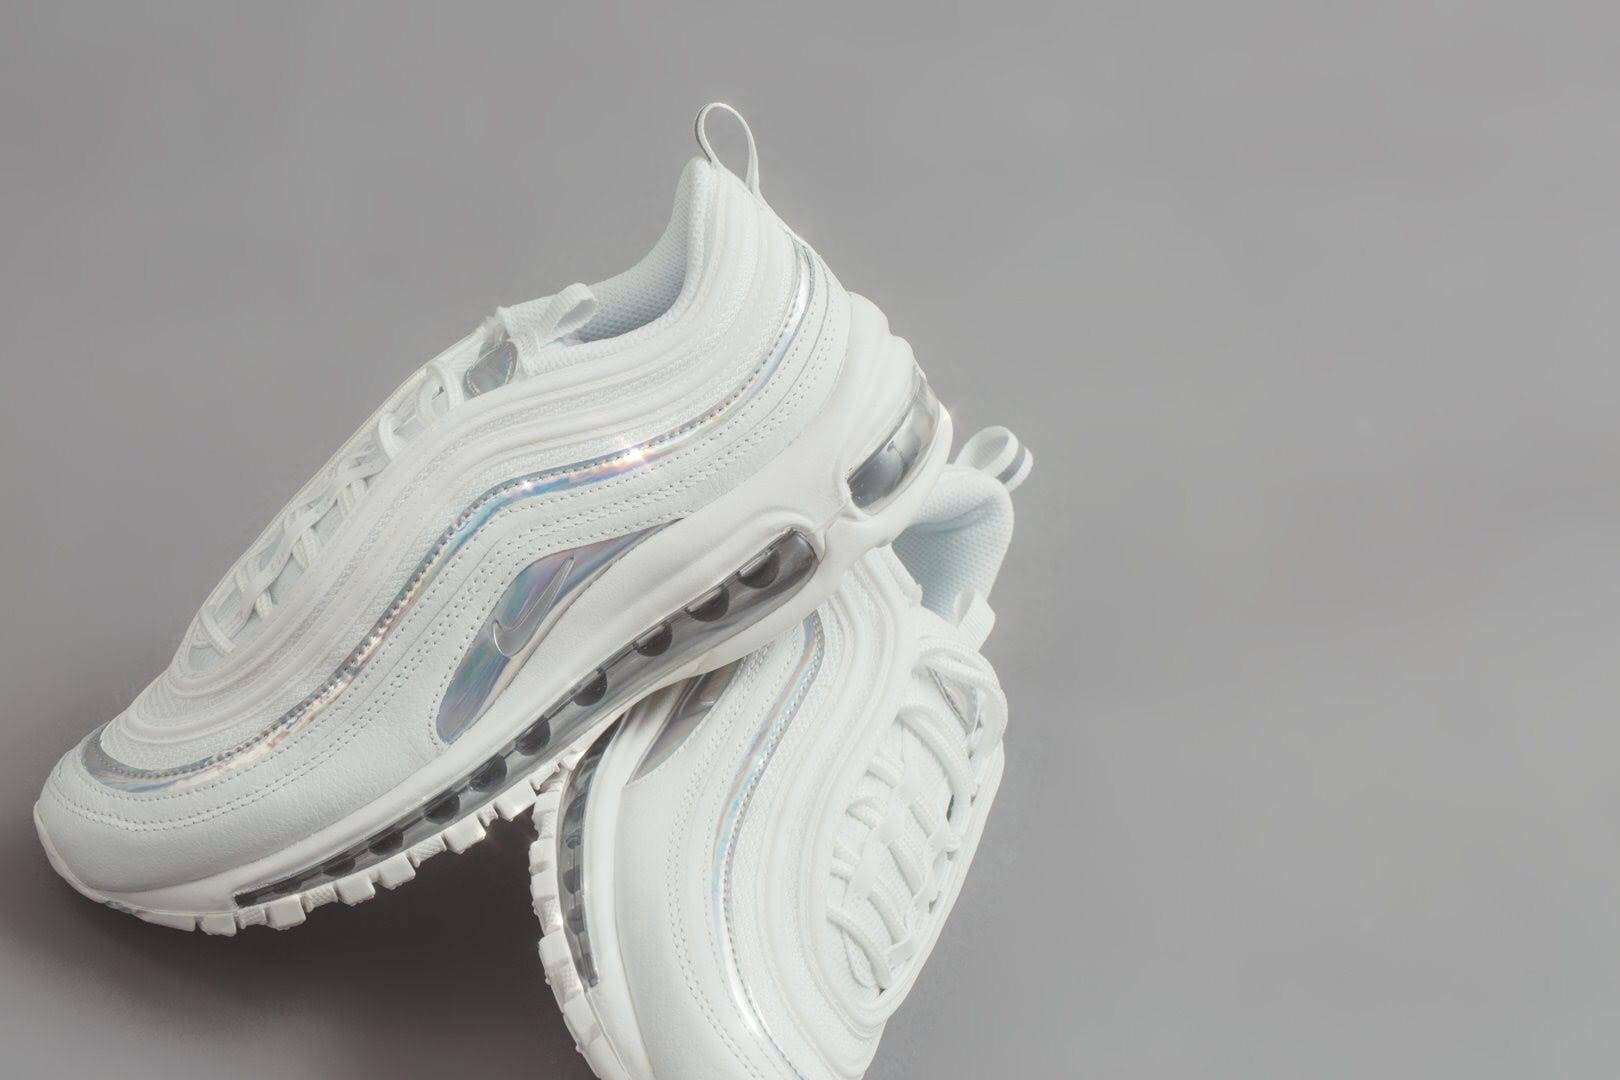 Nike Air Max 97 White Iridescent Sneaker Release | HYPEBAE عطر كلك من درعه